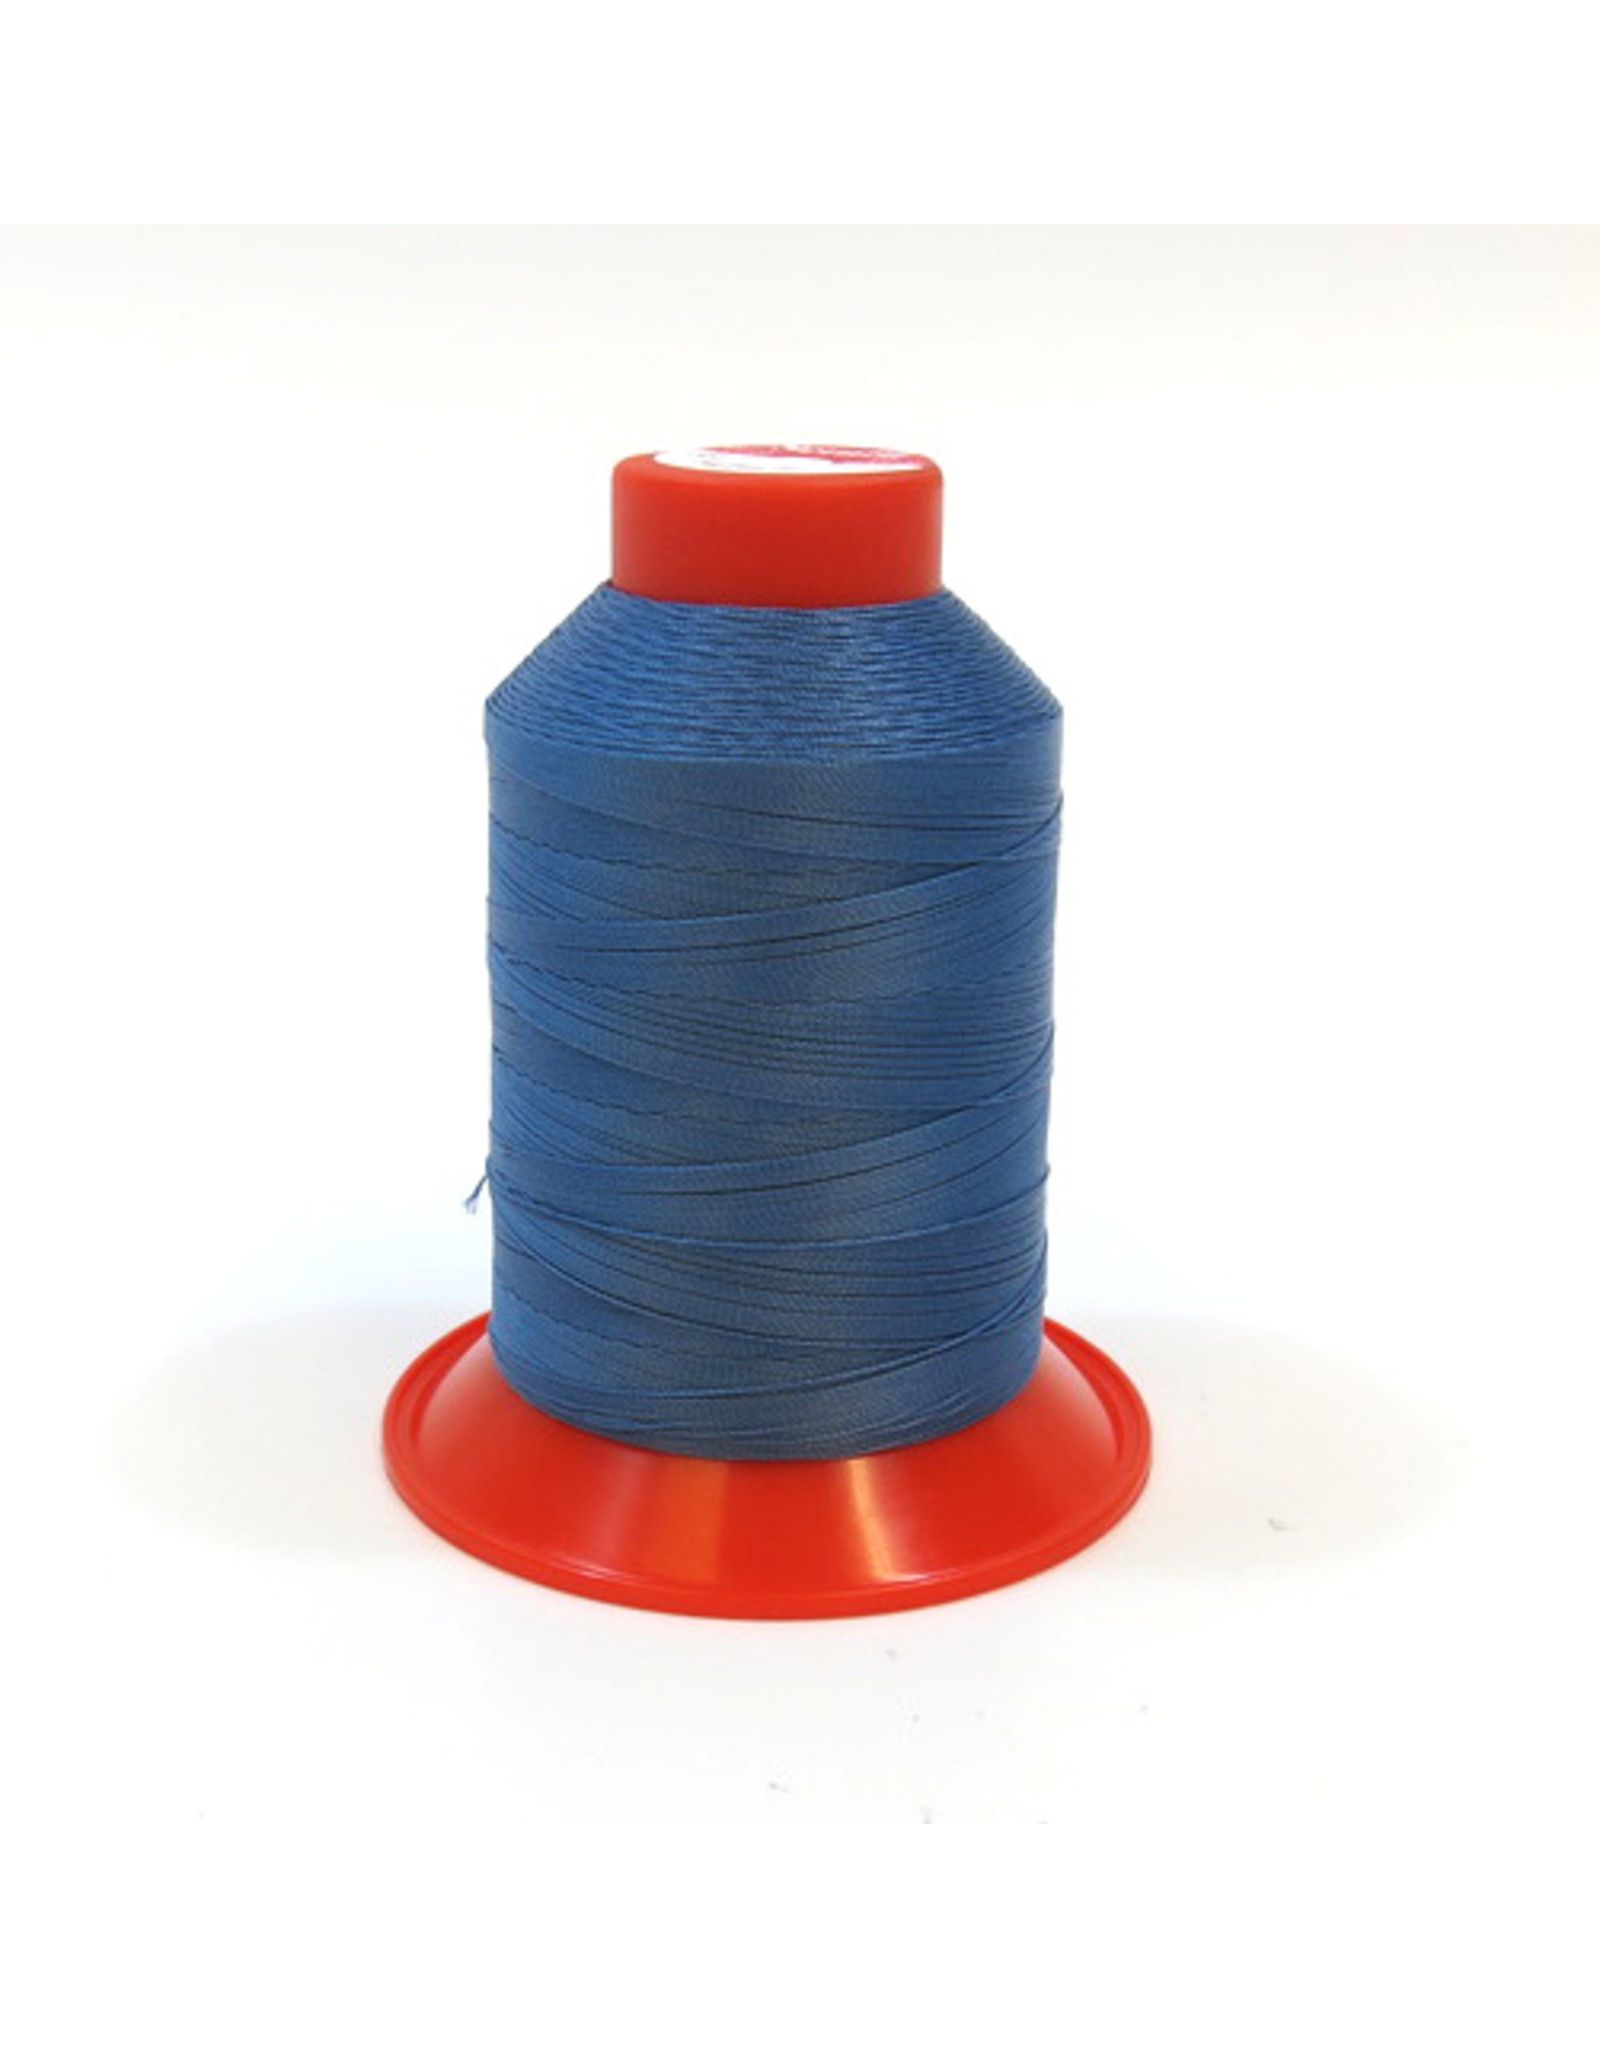 Serafil machine sewing thread 1306